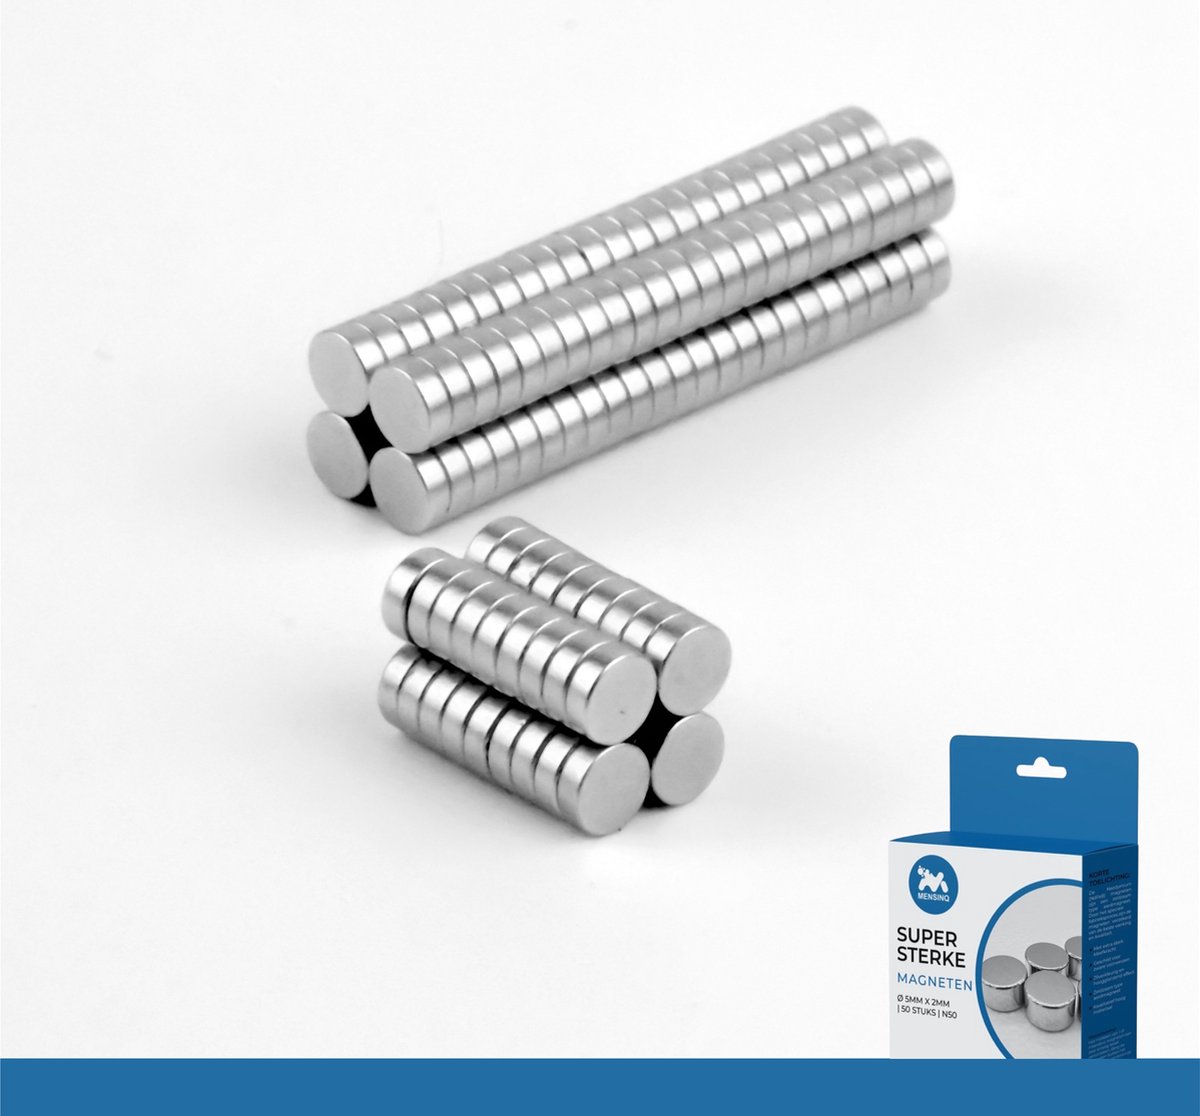 MENSINQ® Magneten – Magneet – Magneetjes – Magneten Sterk – 5x2mm - N50 - 200 stuks